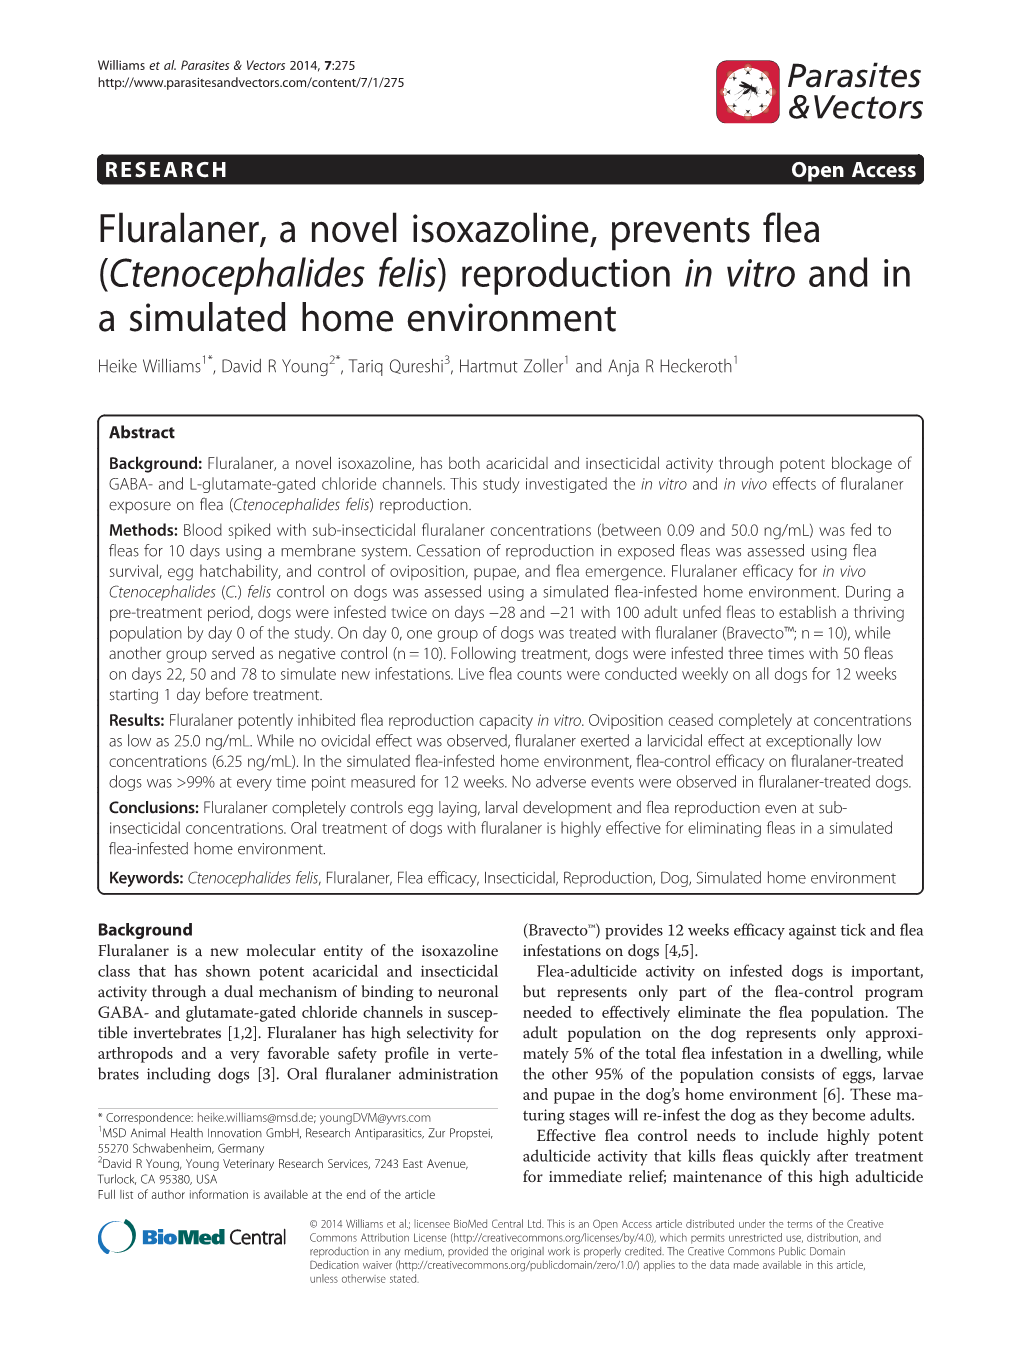 Fluralaner, a Novel Isoxazoline, Prevents Flea (Ctenocephalides Felis)